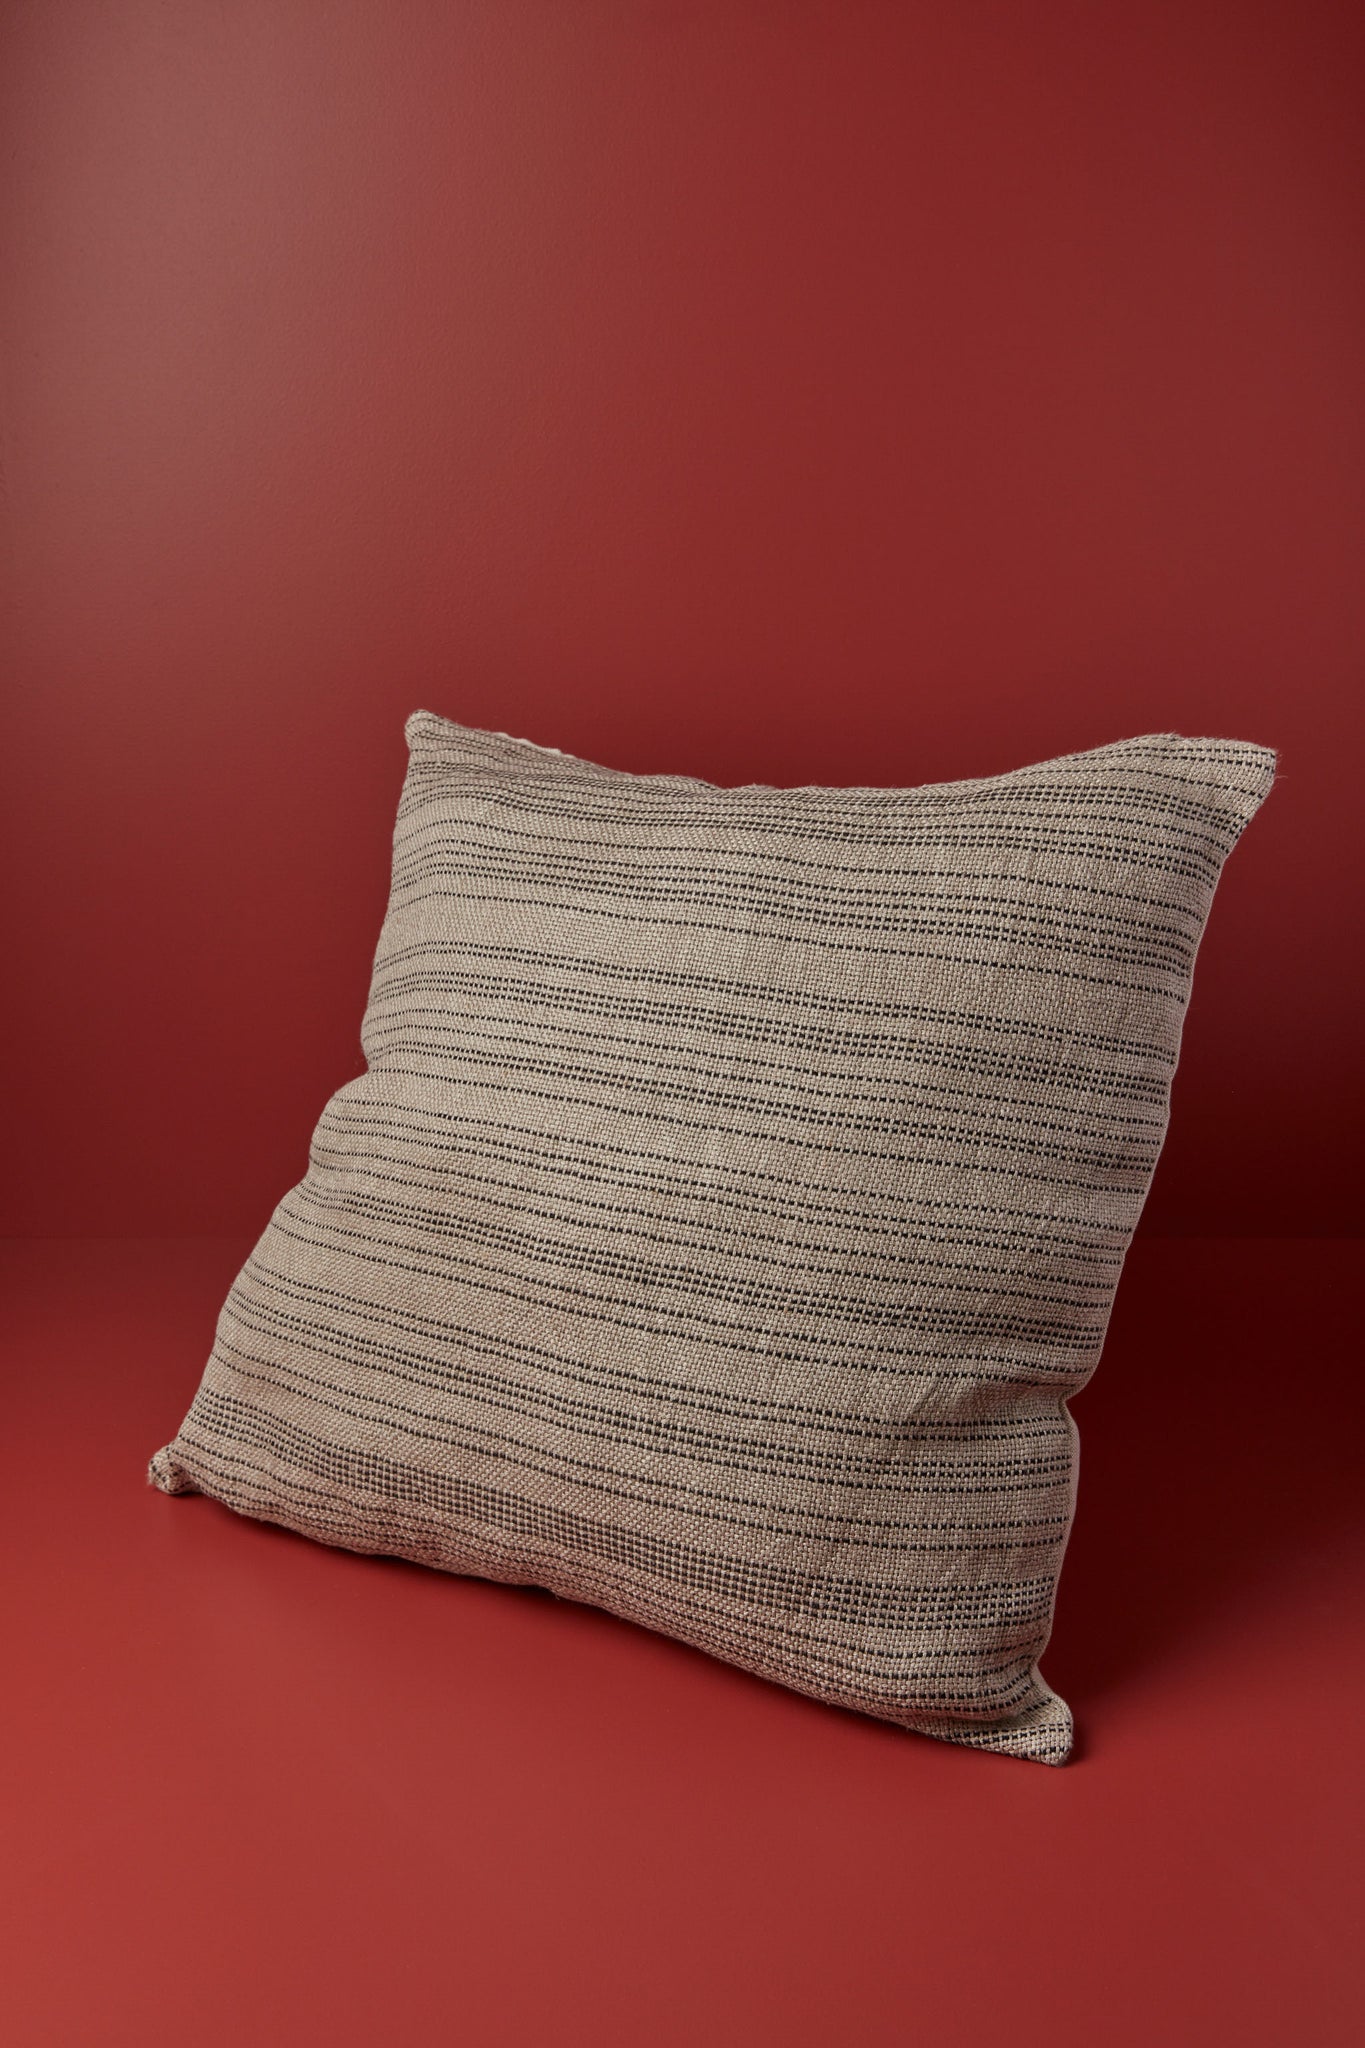 Sundance Studio - Square Pillow, Sand Stripe